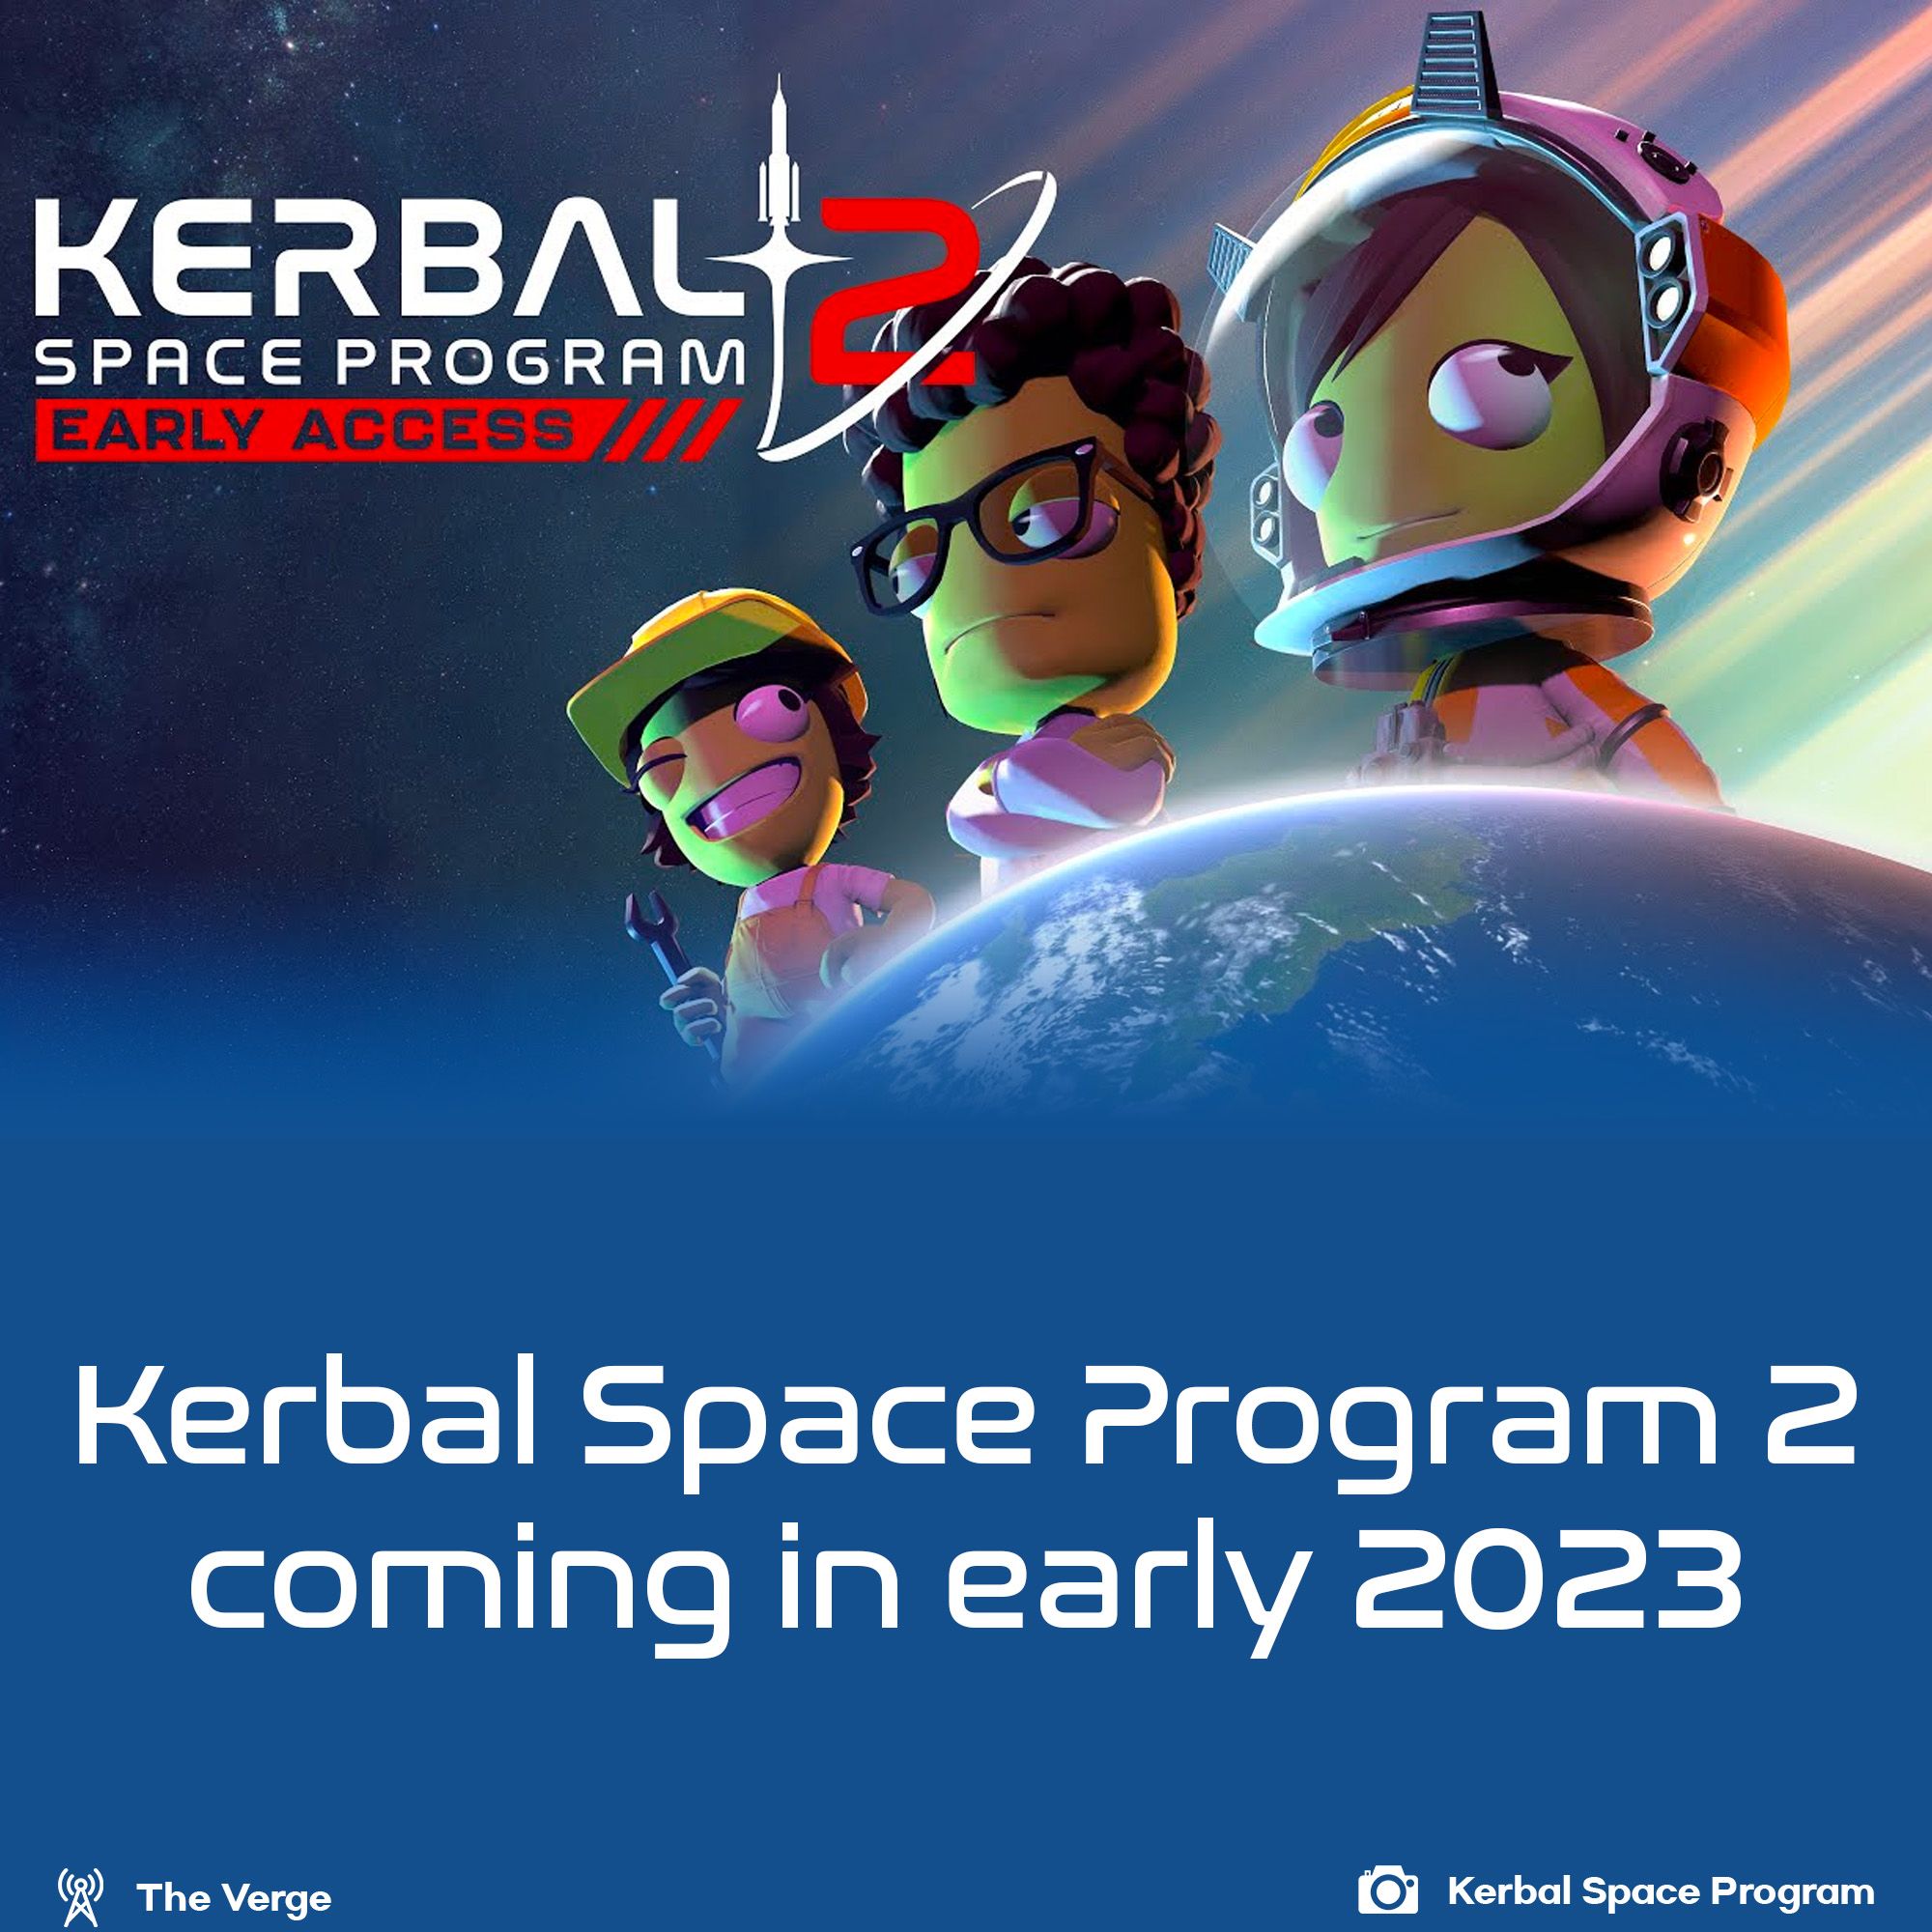 Kerbal Space Program 2 coming in February 2023